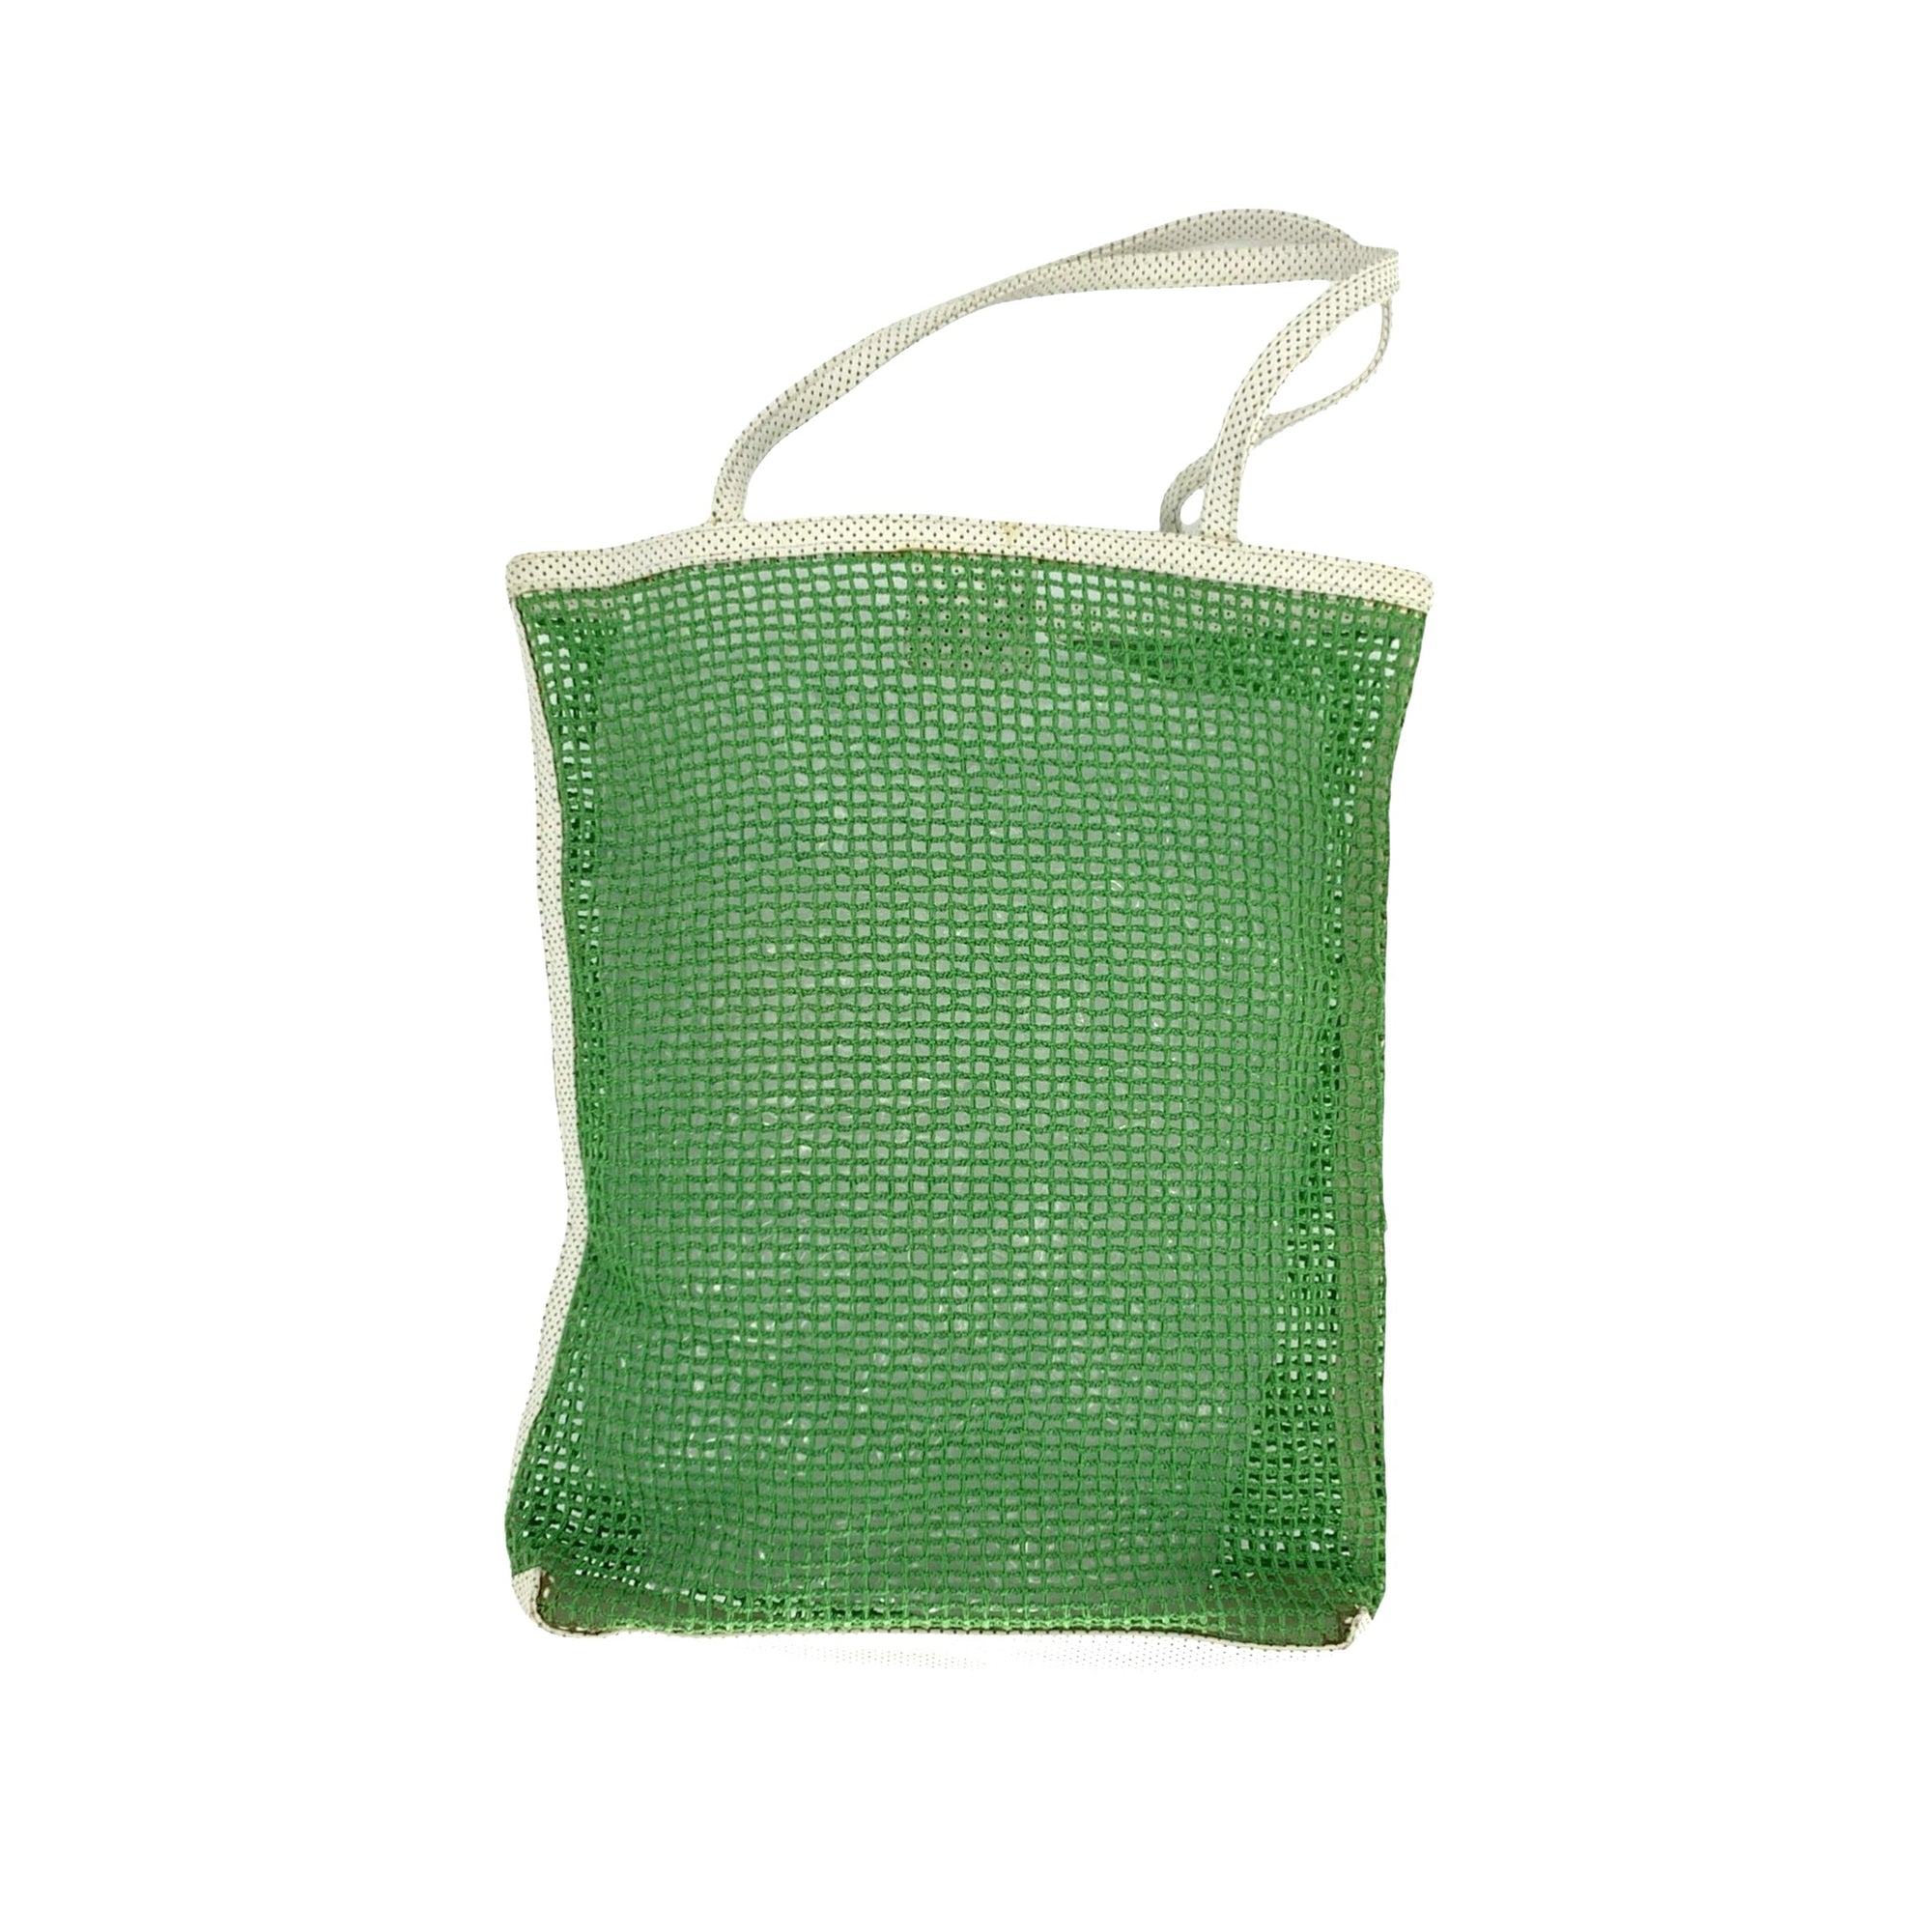 Chanel Green Tennis Tote Bag